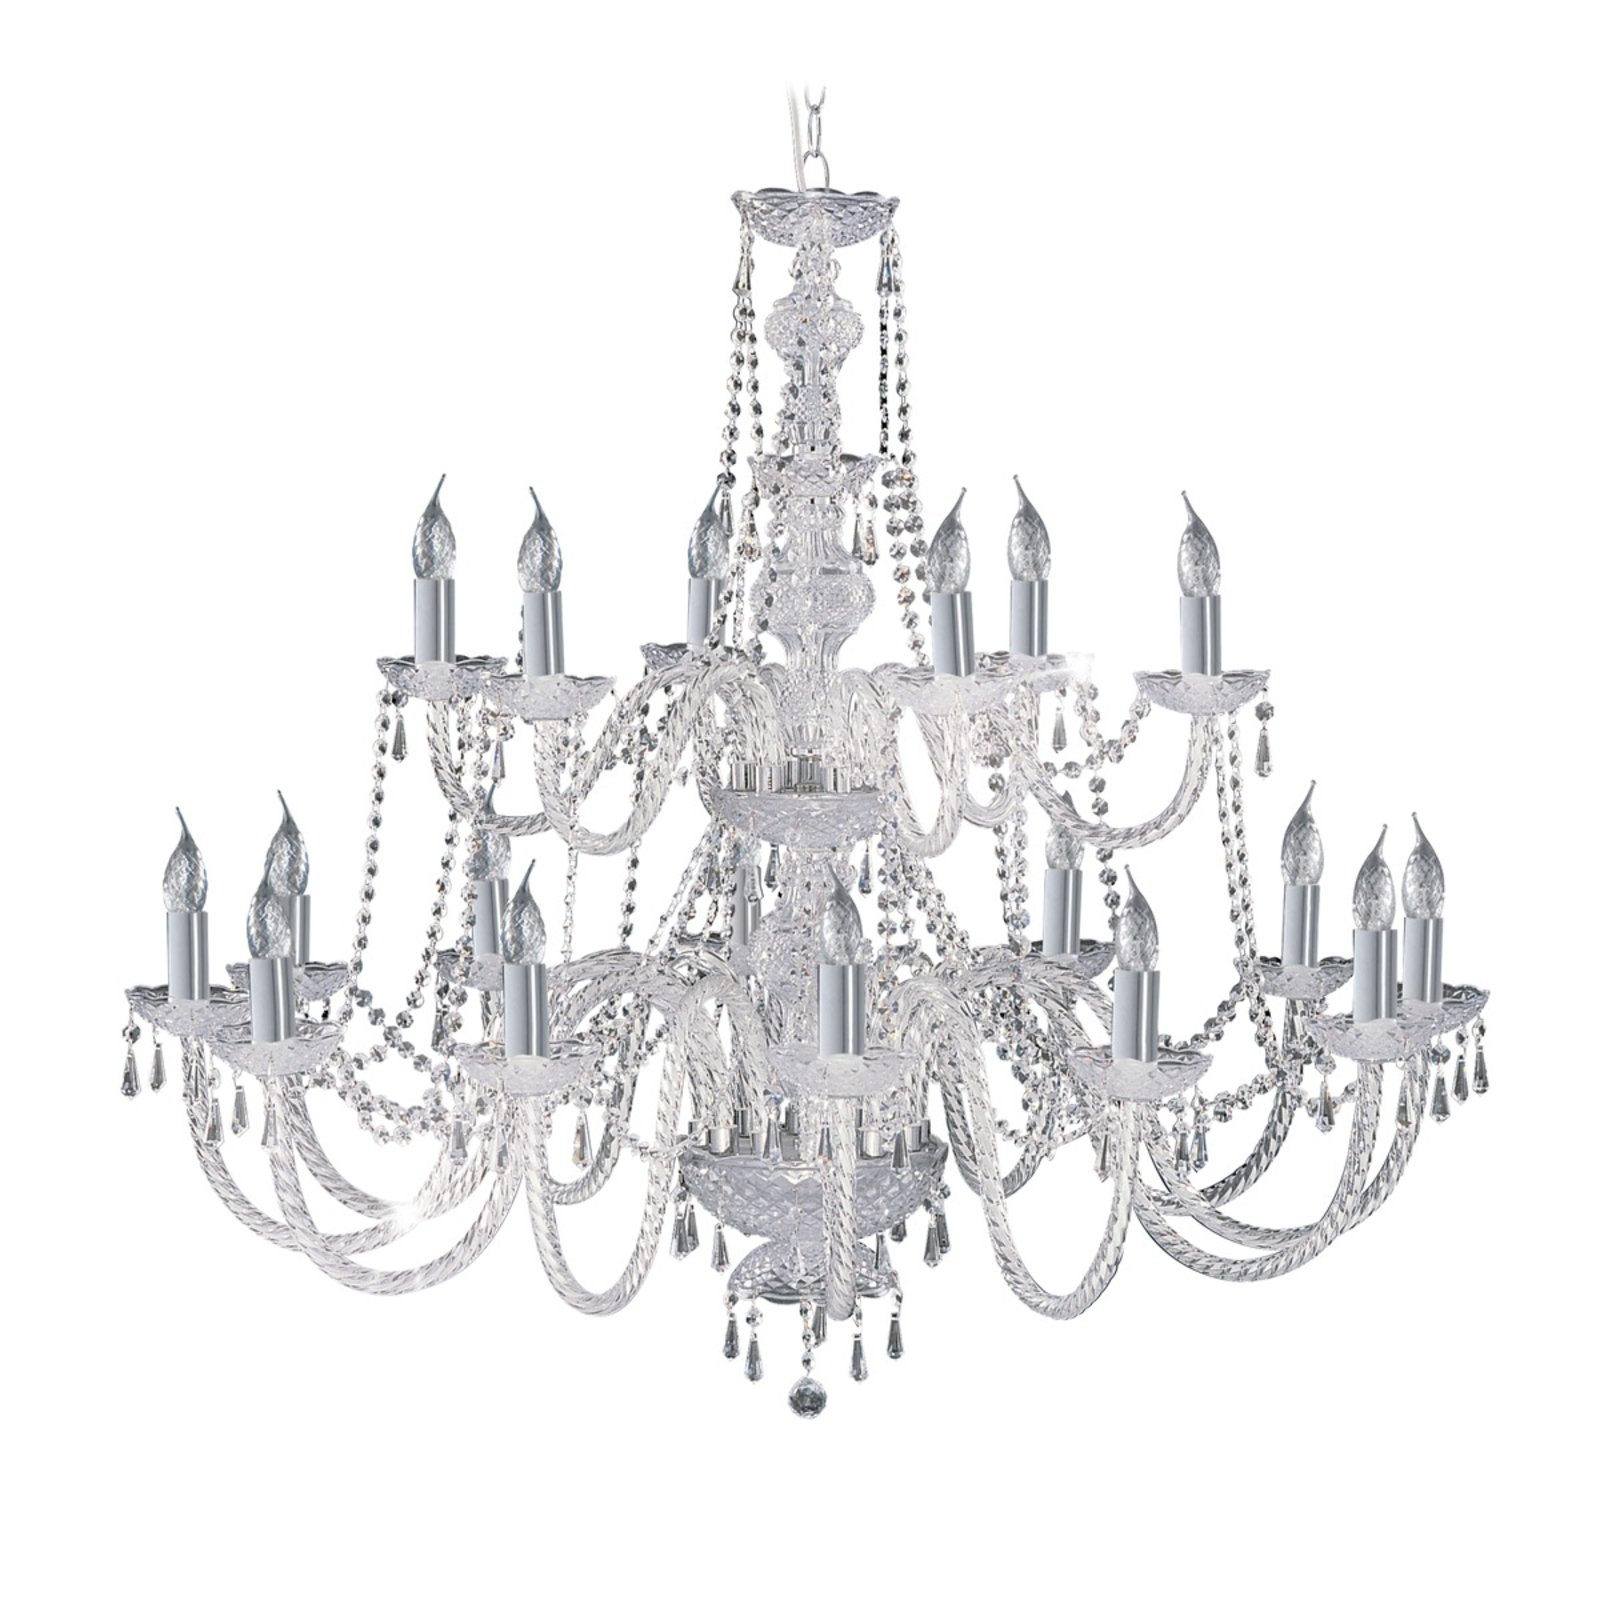 18-bulb Hale crystal chandelier